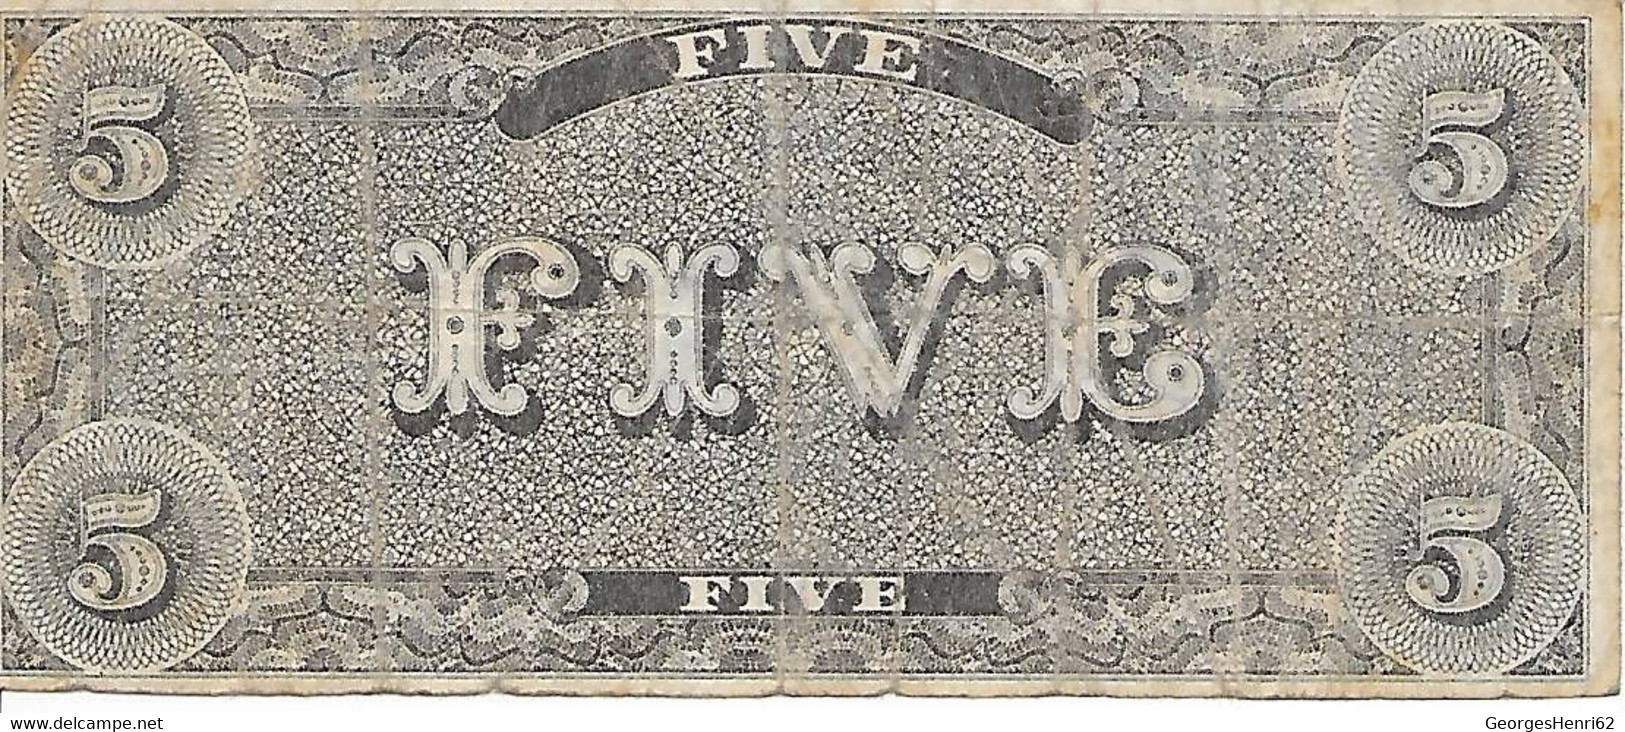 CONFEDERATE STATES OF AMERICA - 2/9/1861 - BE - Confederate Currency (1861-1864)